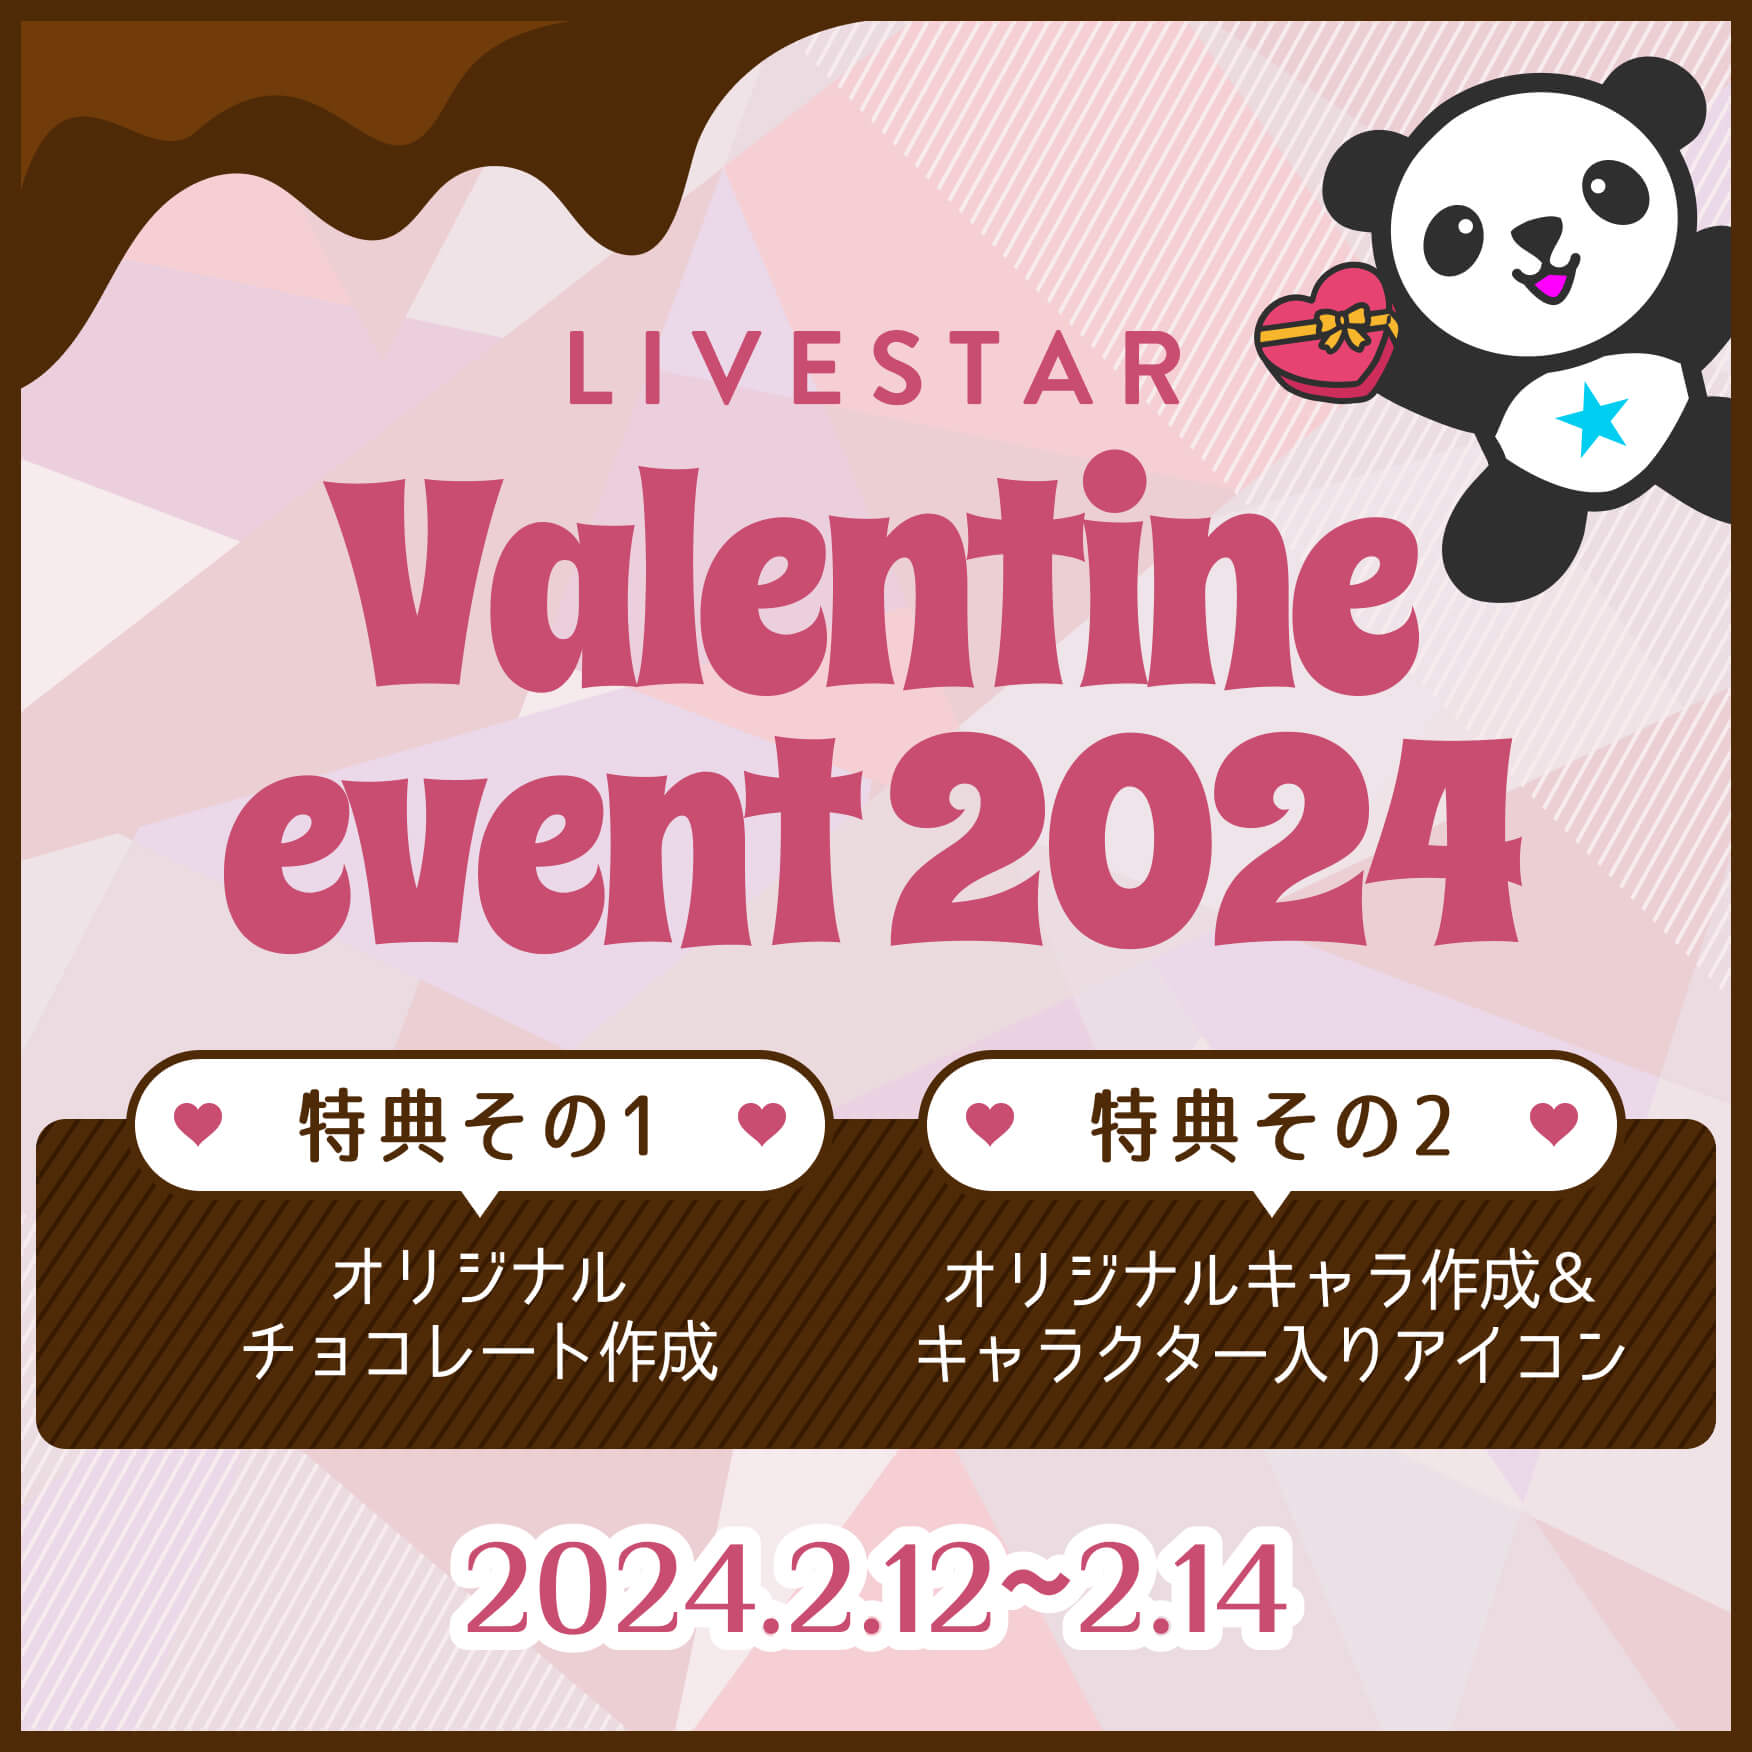 Valentine event2024